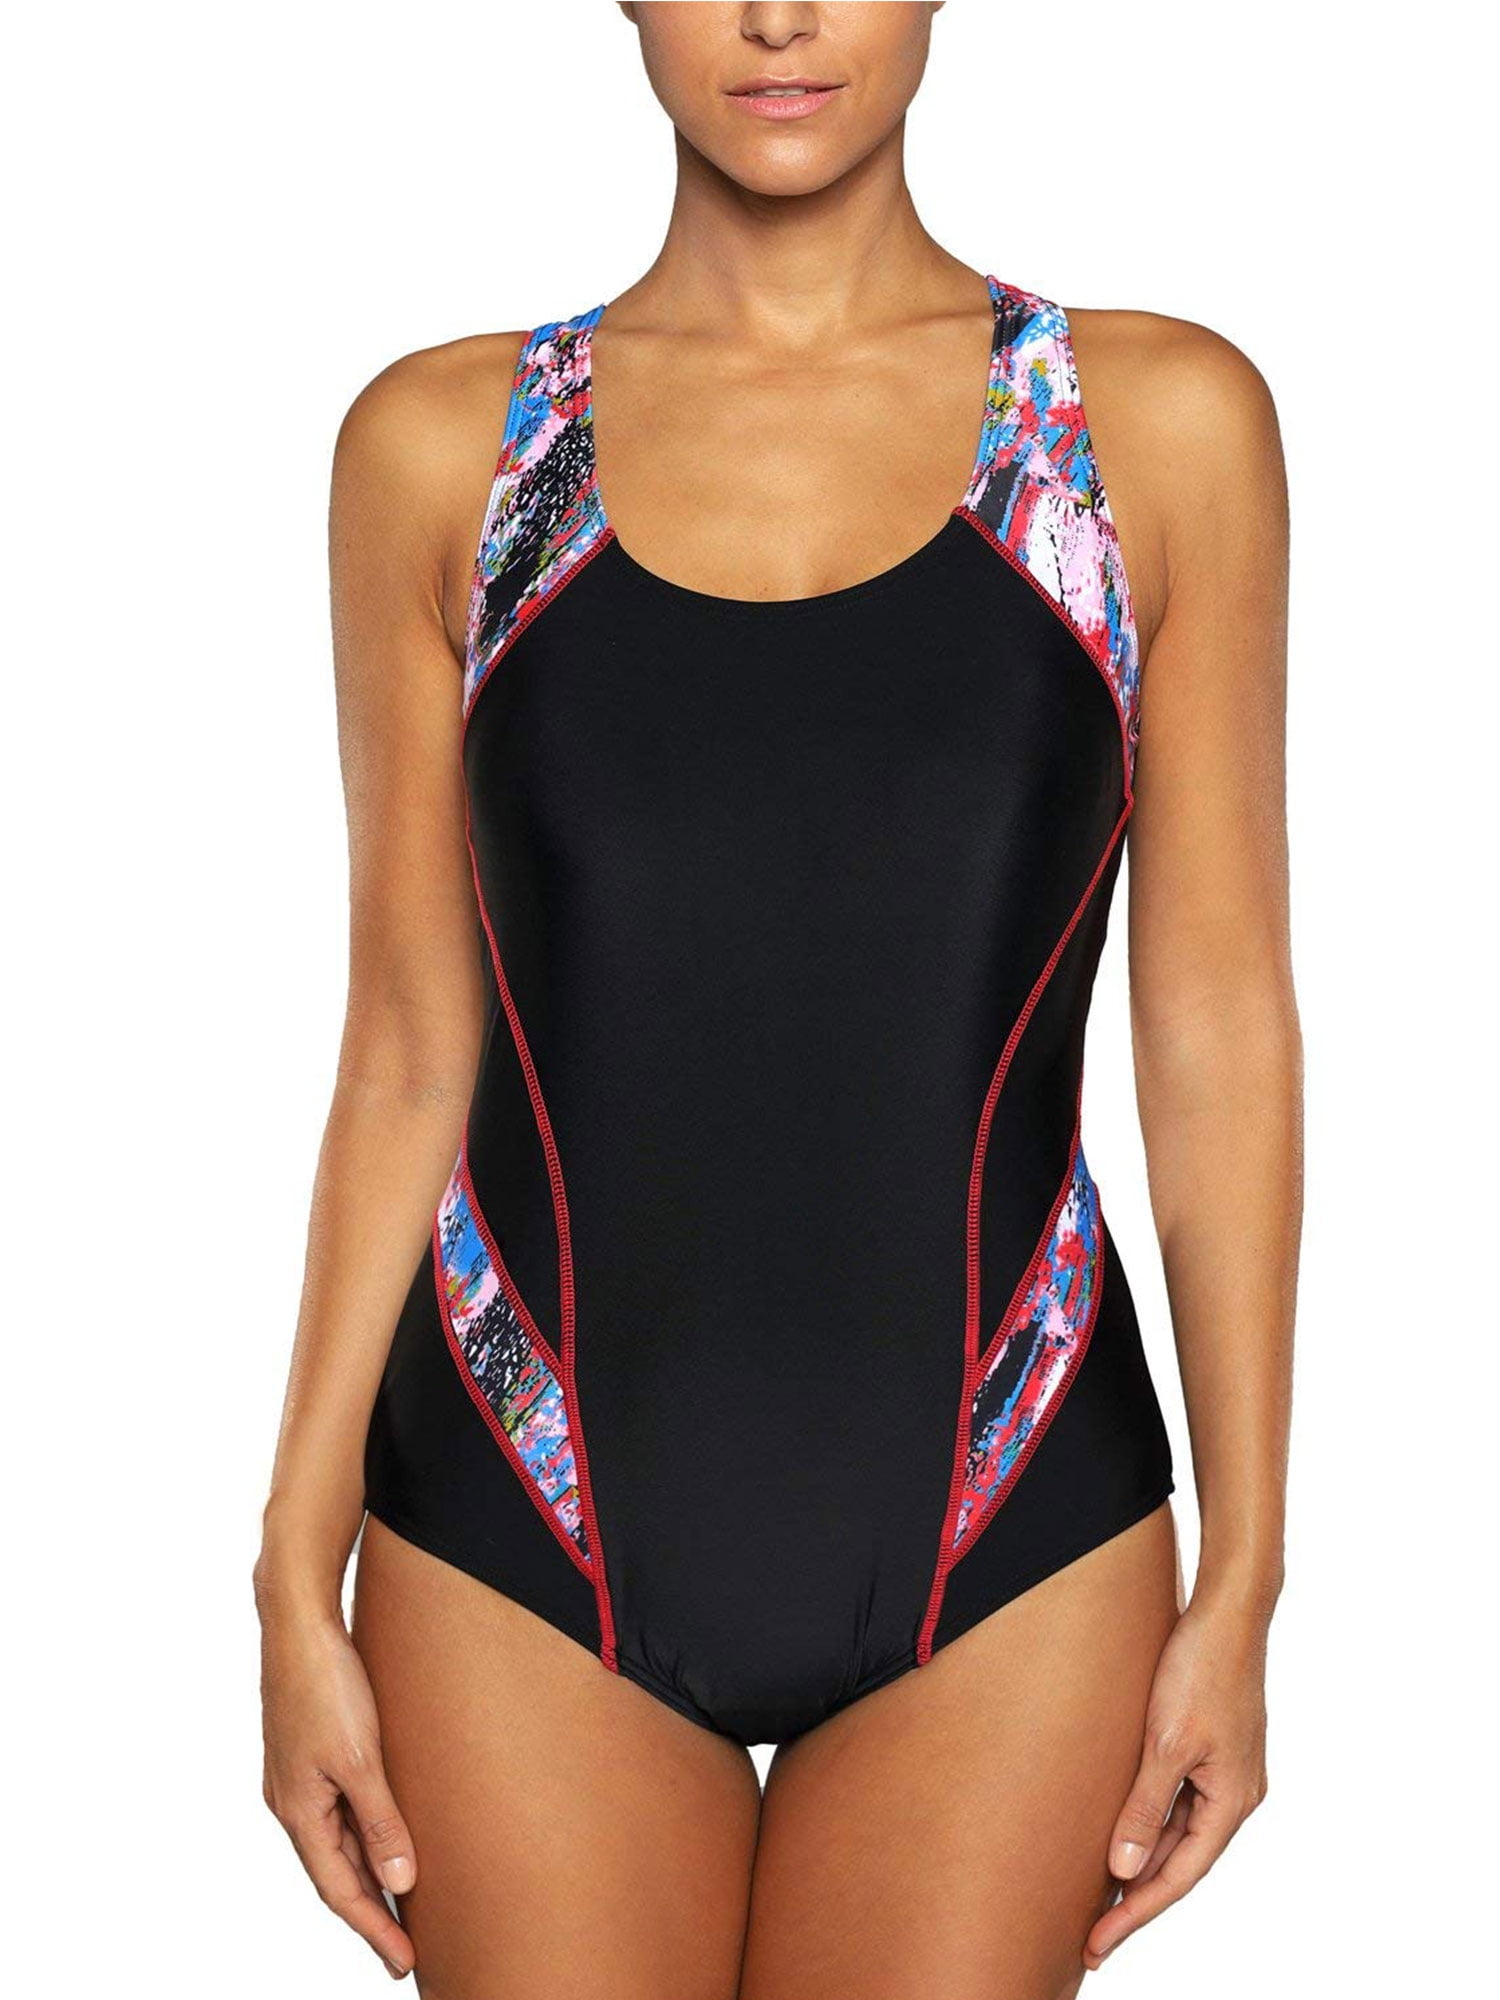 Charmo Women's One-Piece Beachwear Sport Bathing Suit Mokini Swimsuits